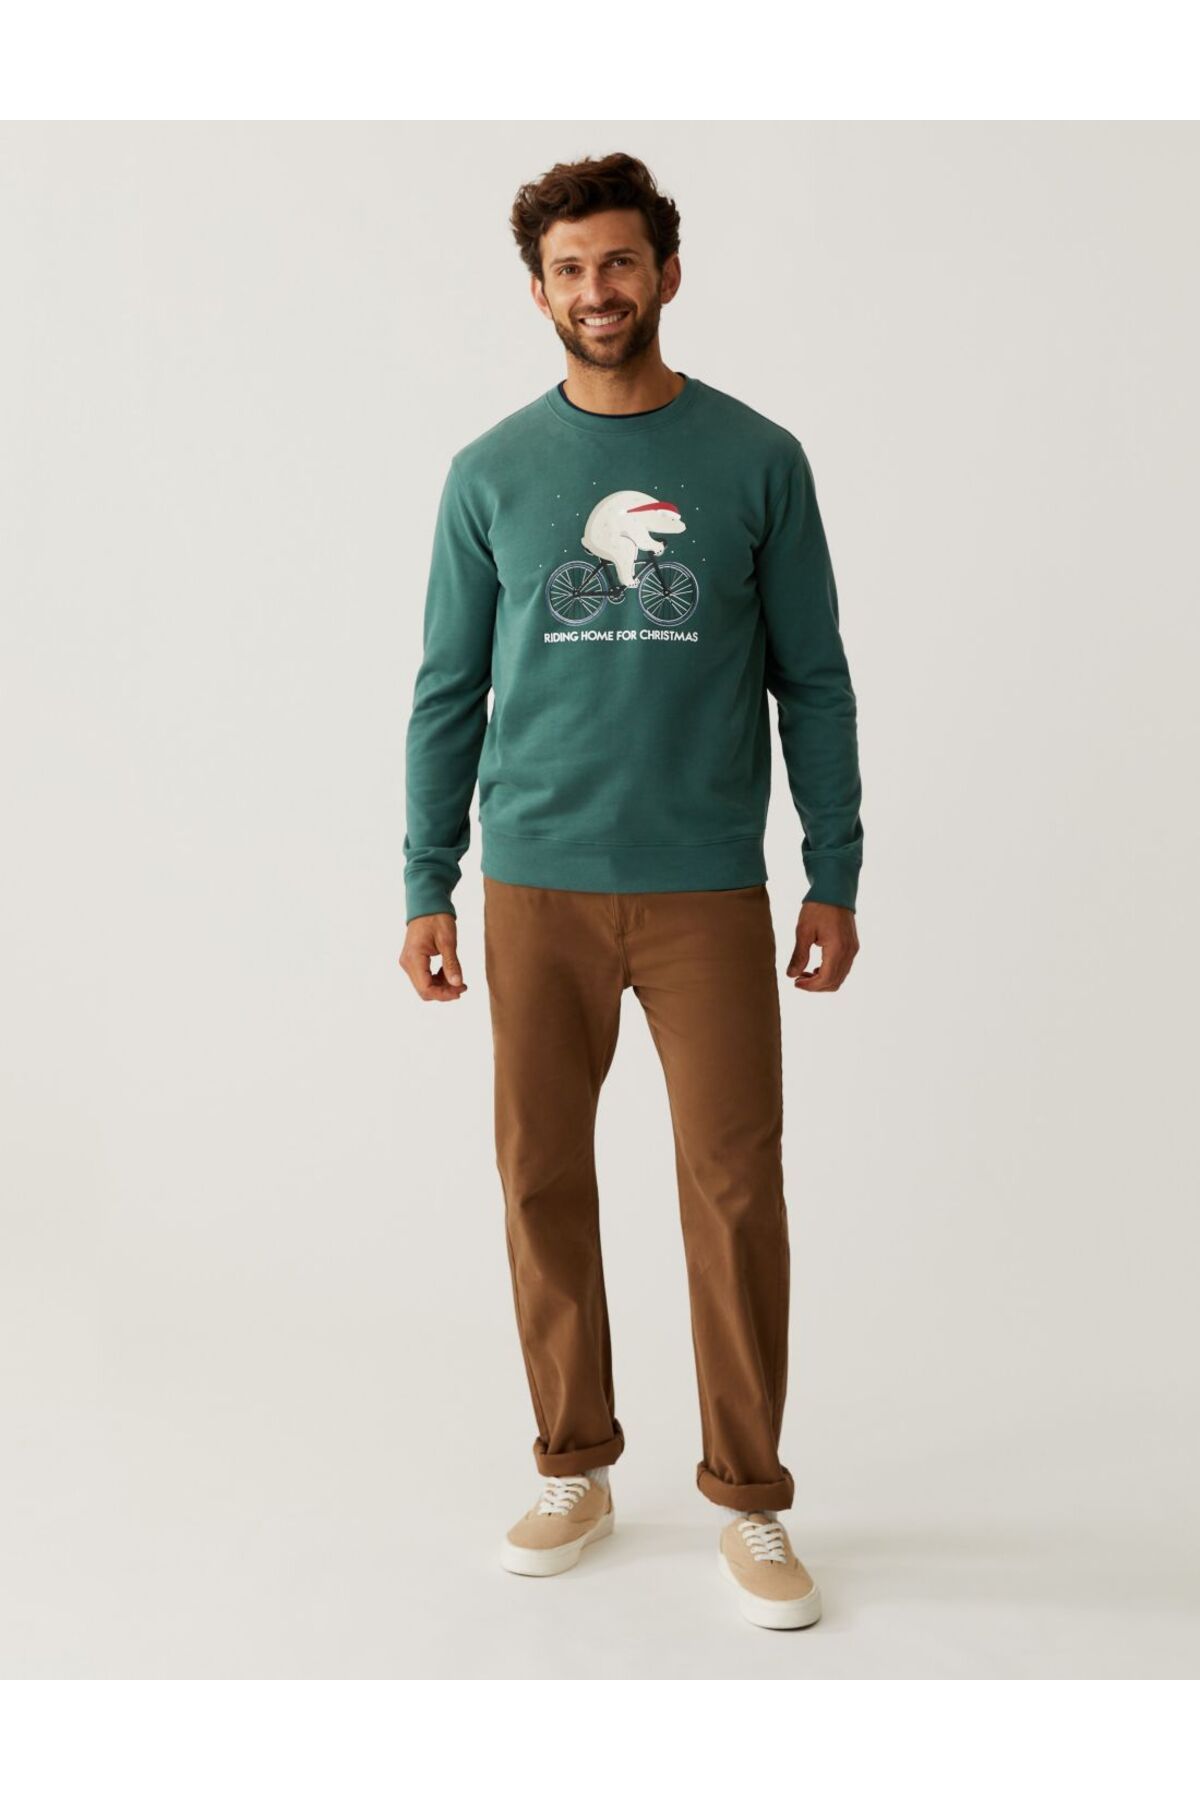 Marks & Spencer Saf Pamuklu Yılbaşı Temalı Sweatshirt